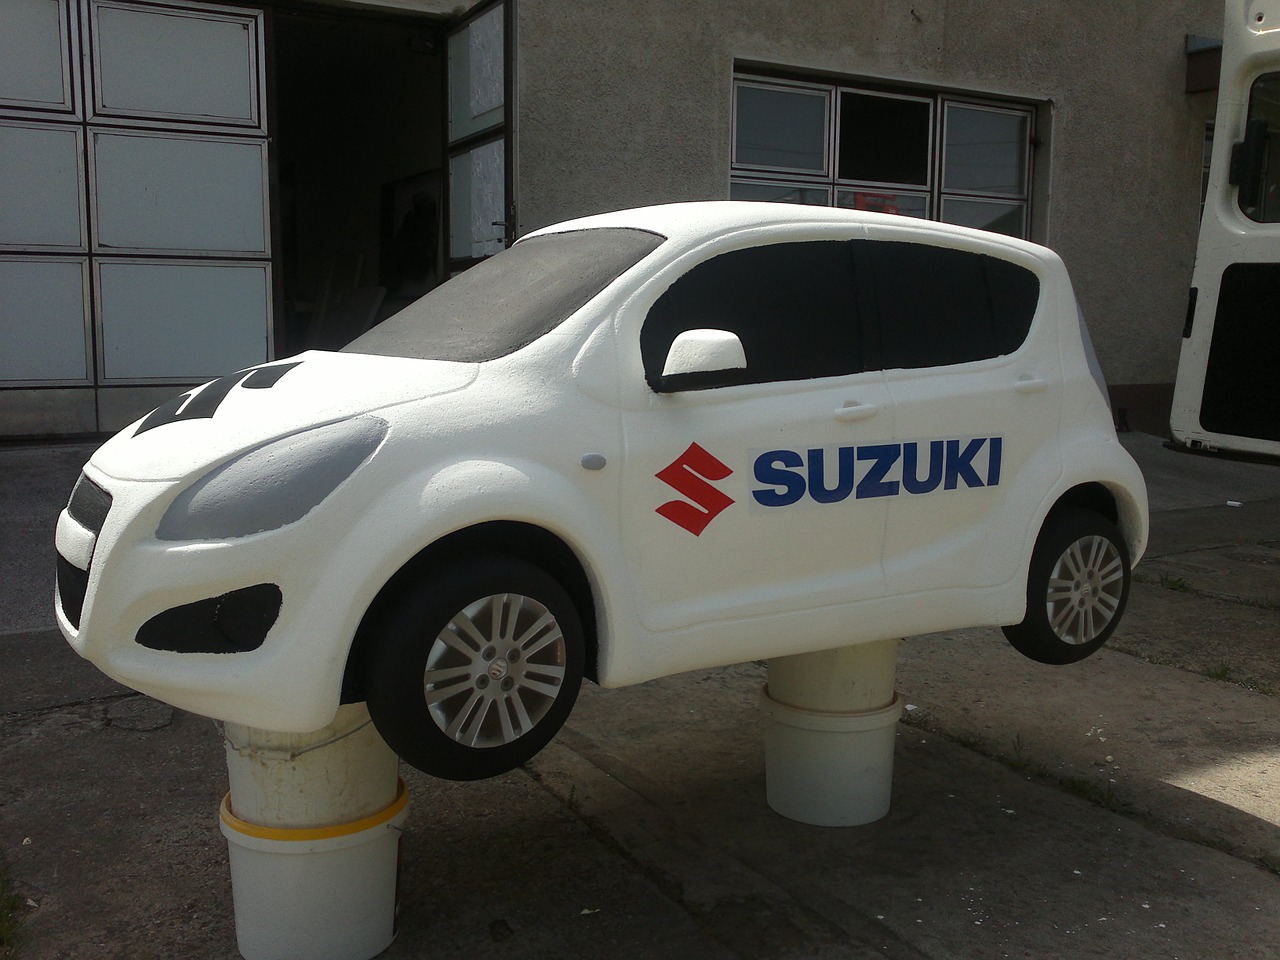 Suzuki prestigao BMW po profitabilnosti